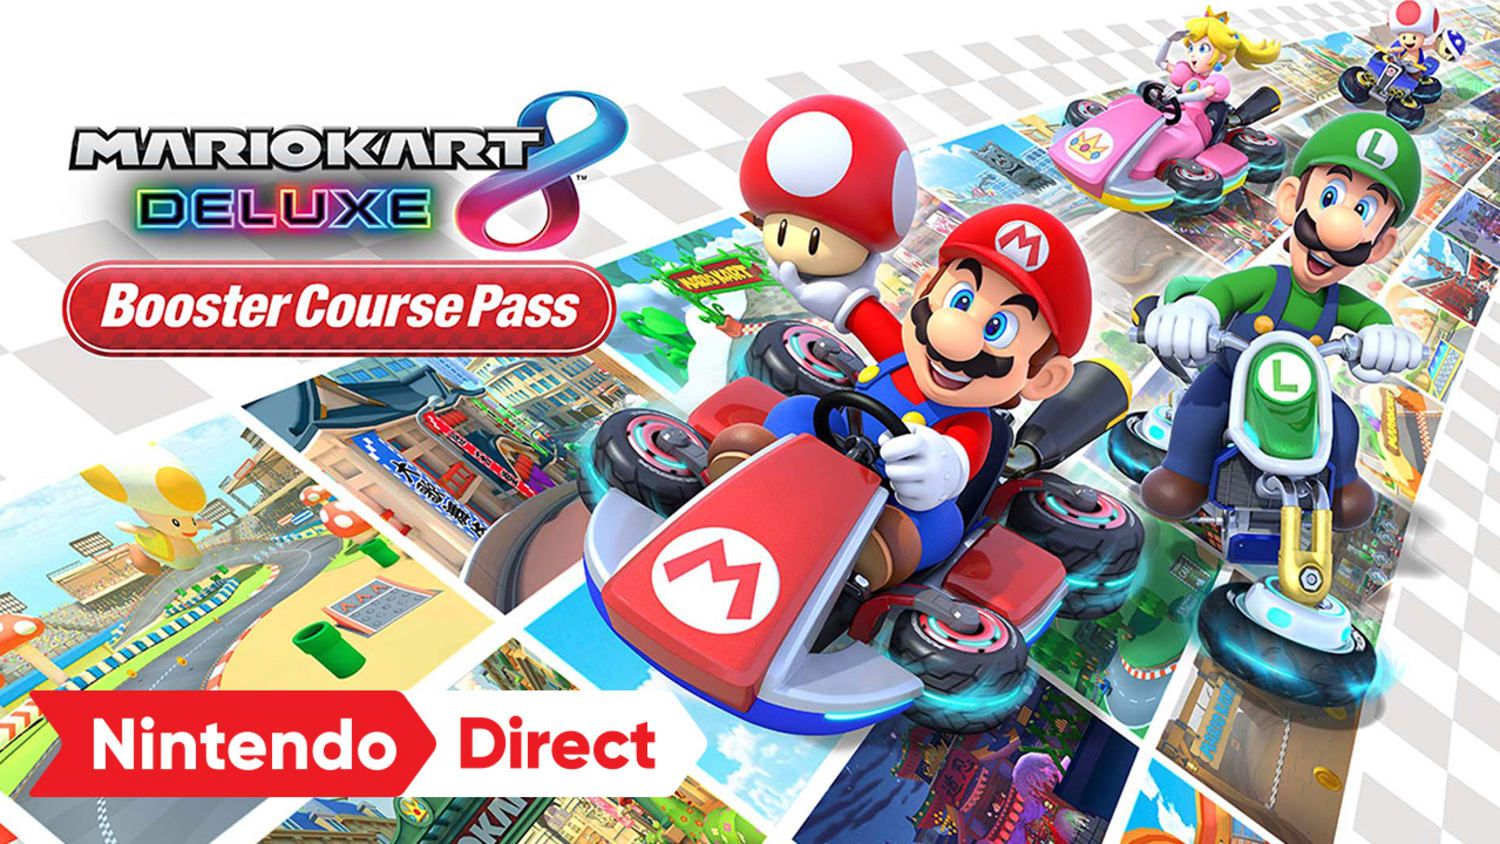 Buy Mario Kart 8 Deluxe Nintendo Switch Key Cheaper!